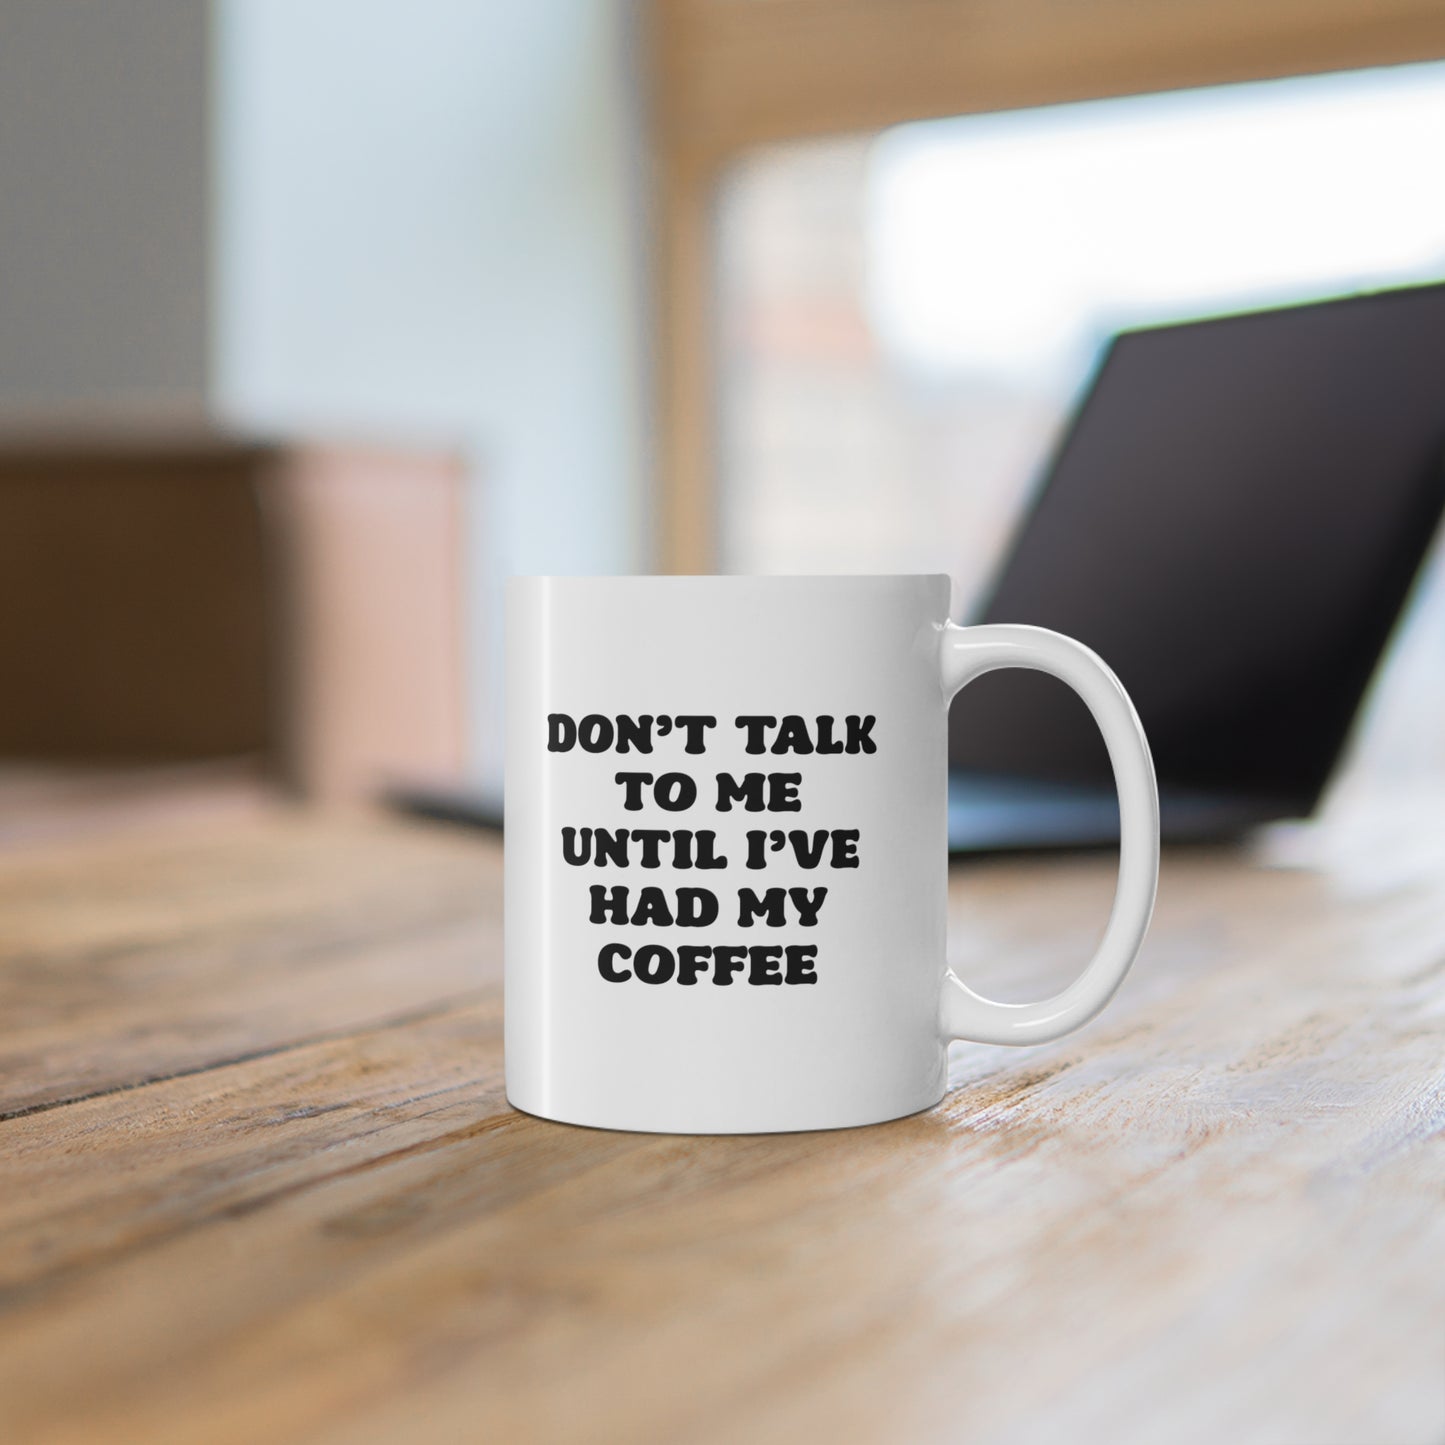 Don't Talk to Me Until I've Had My Coffee ceramic Mug 11oz